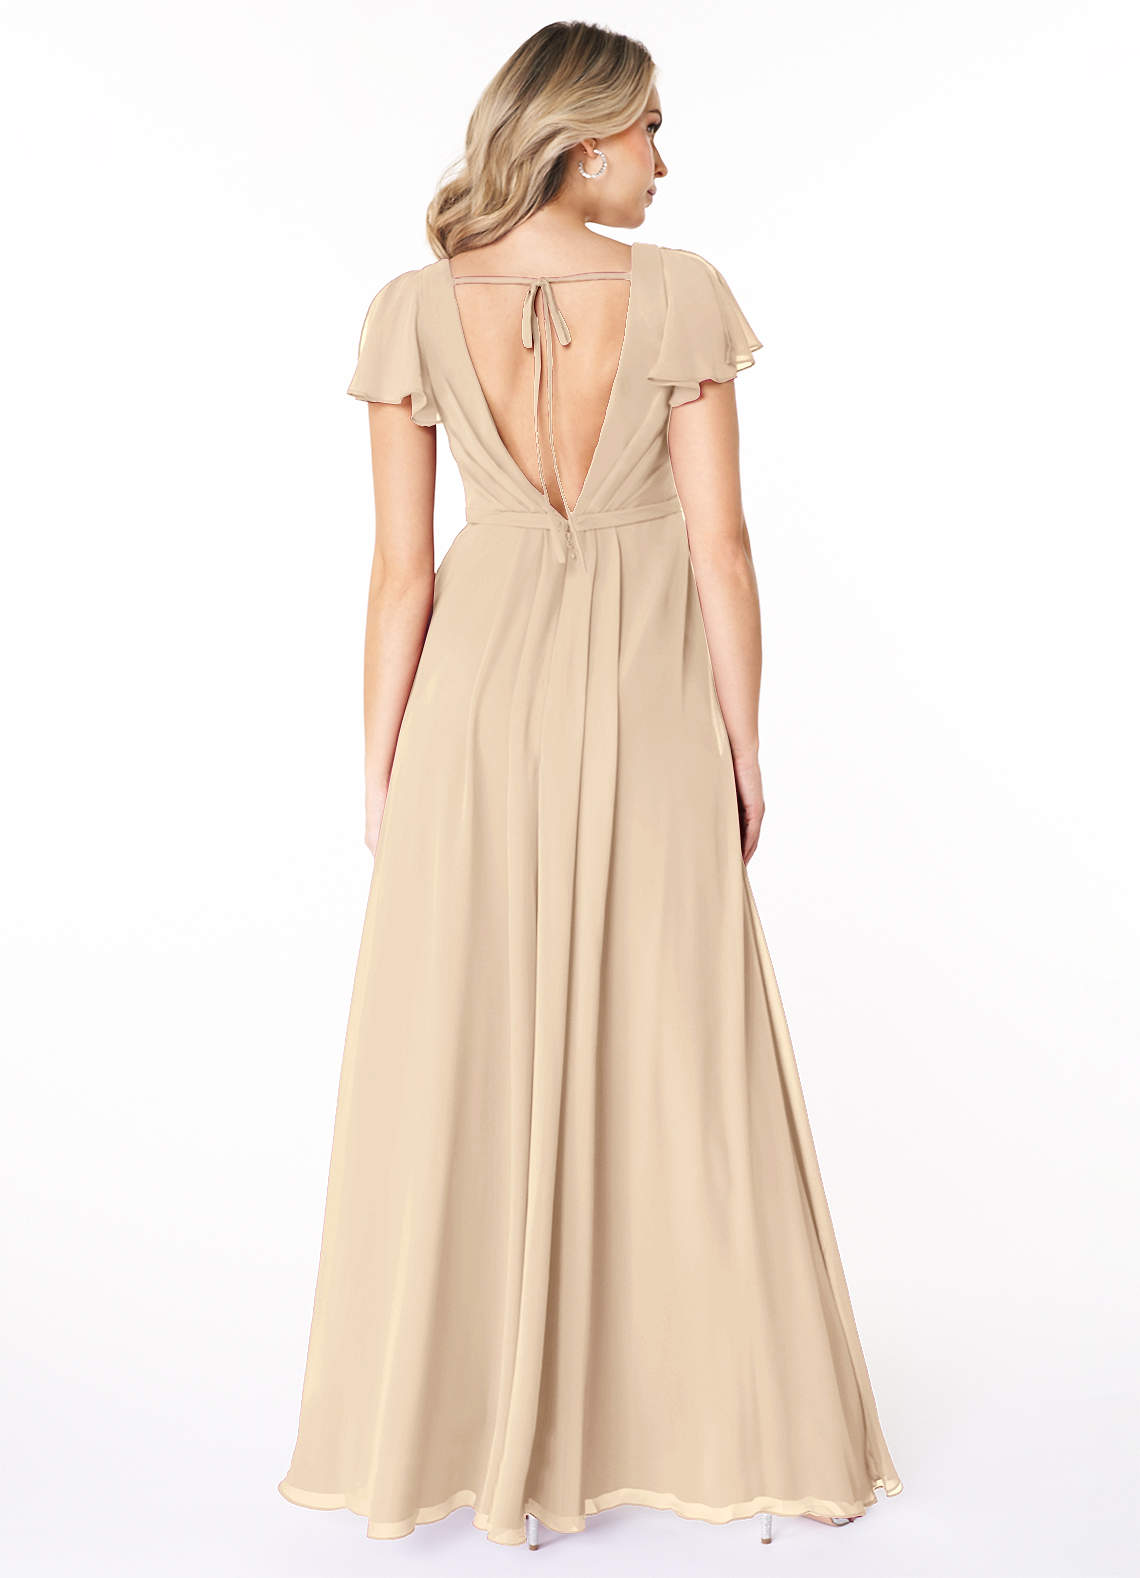 Azazie Reverie Bridesmaid Dresses A-Line V-Neck Ruched Chiffon Floor-Length Dress image1